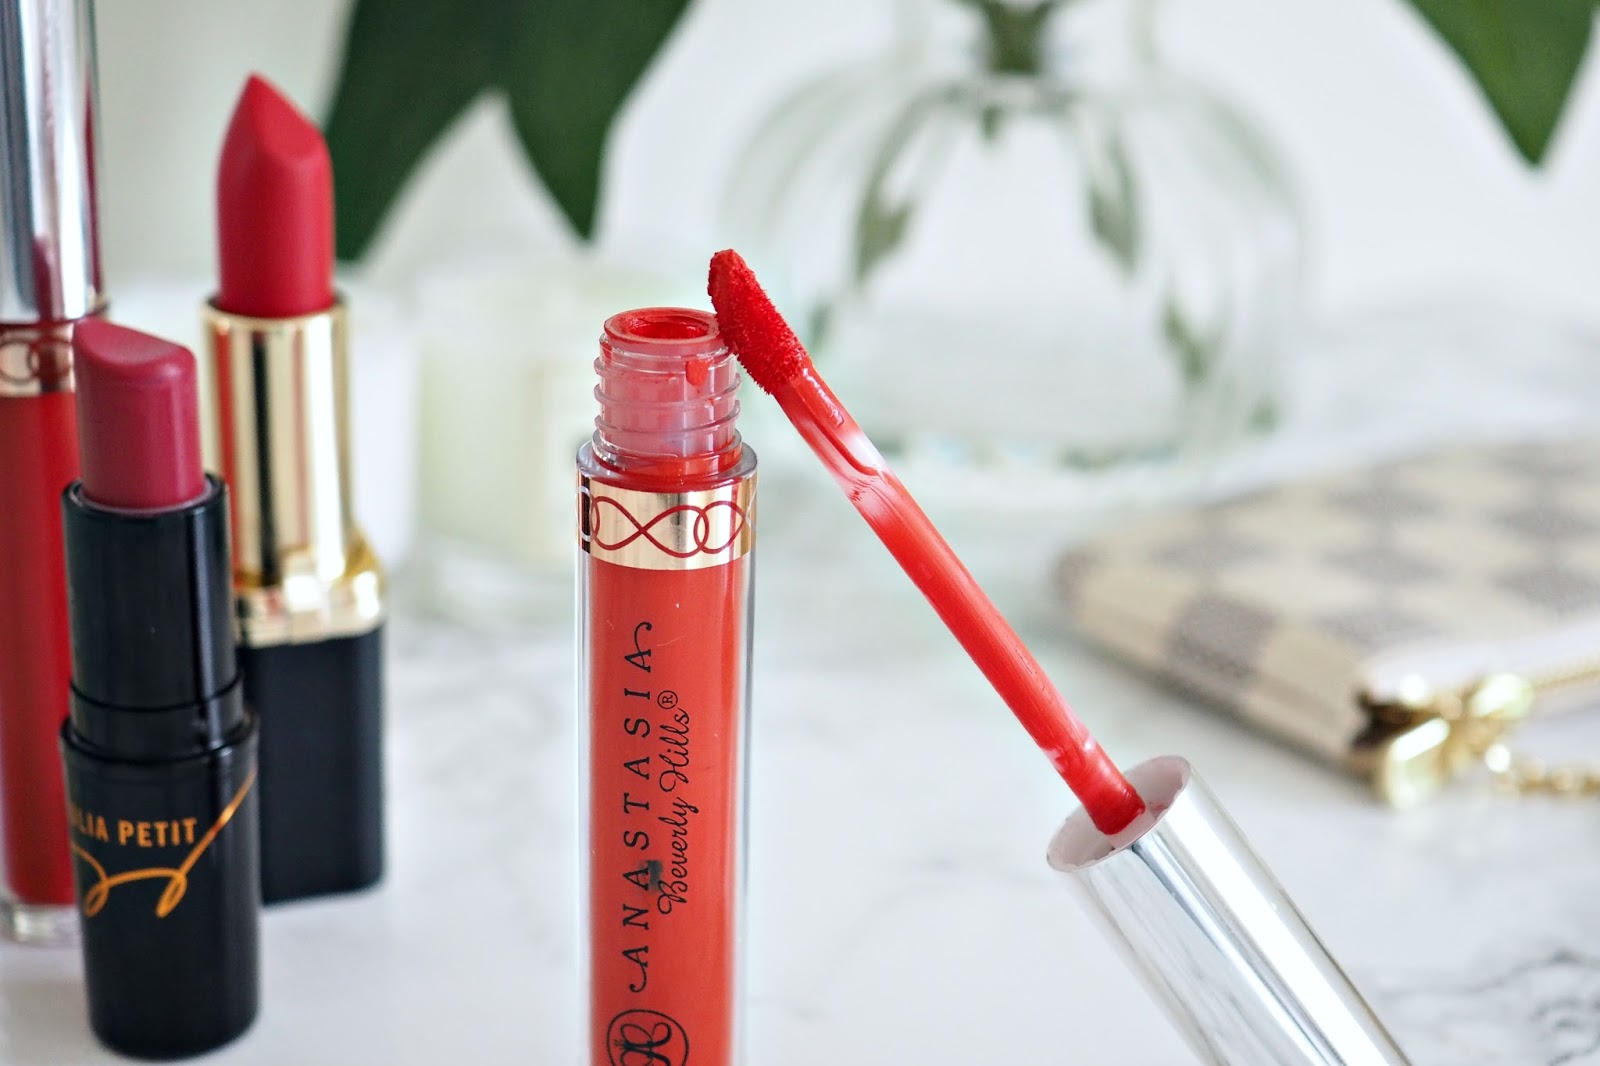  Anastasia Beverly Hills Liquid Lipstick in shade 'Spicy'